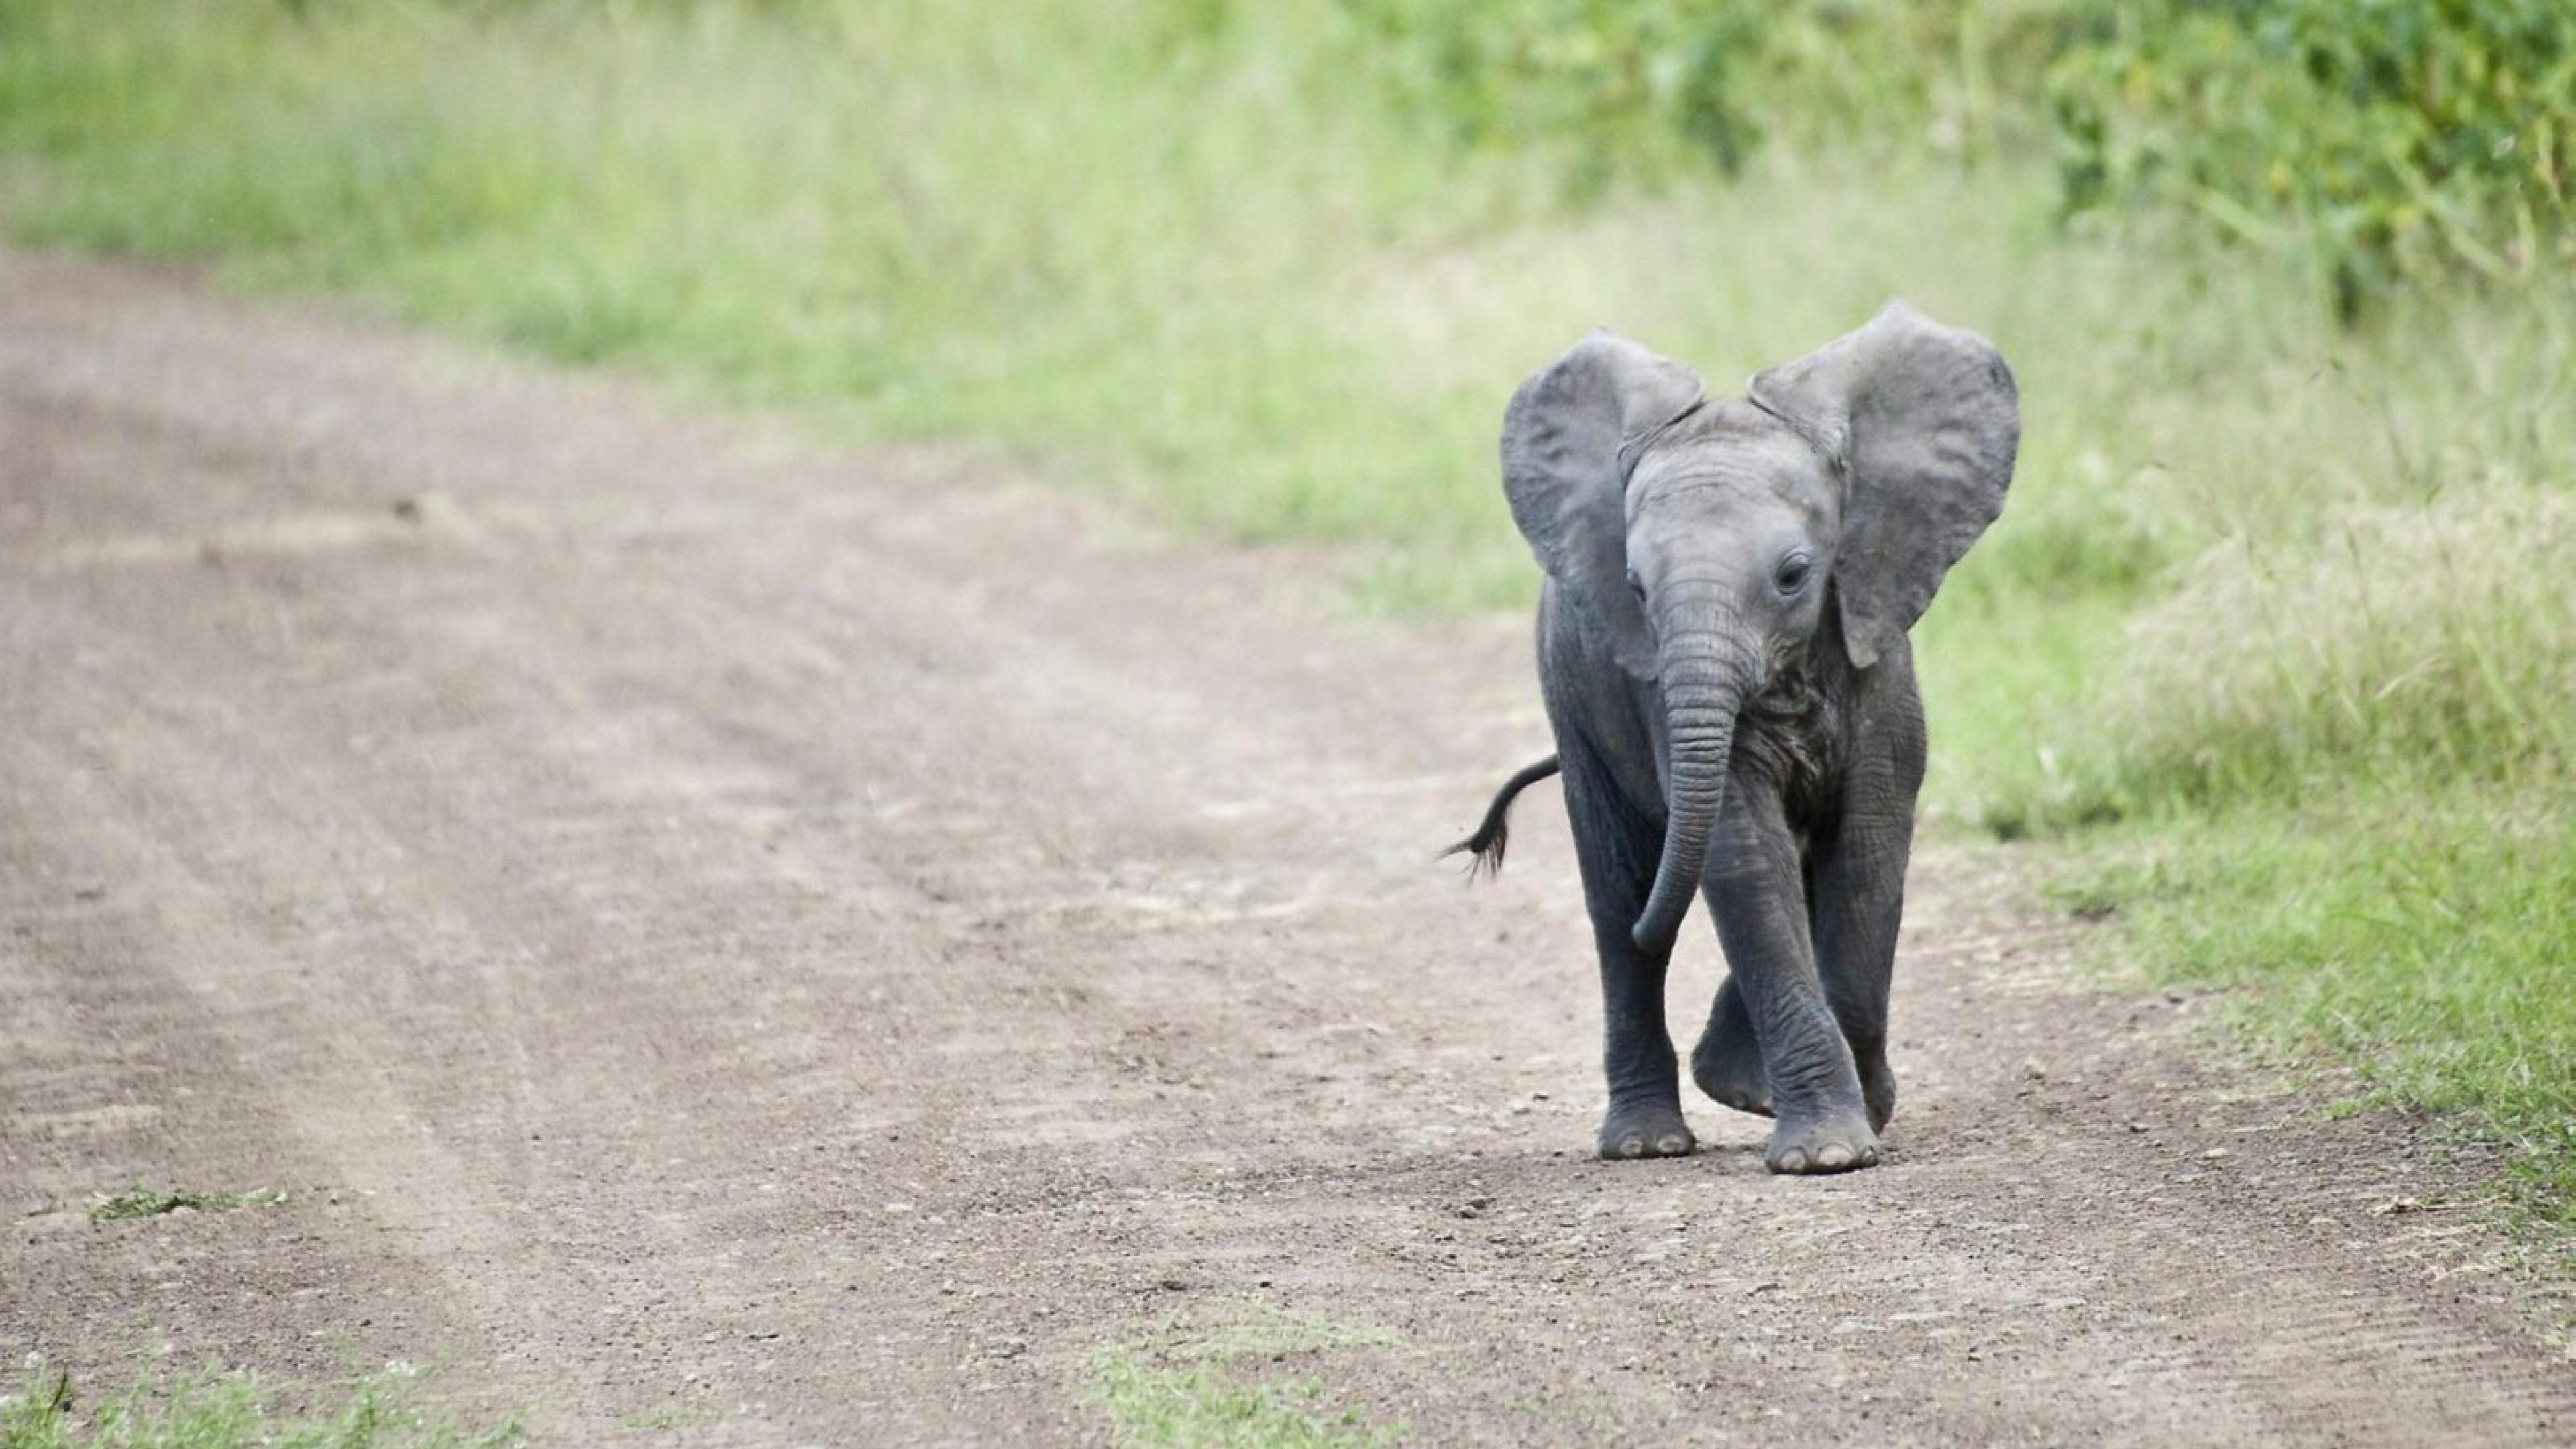 34 Best Elephant phone wallpaper ideas  elephant elephant love animals  wild